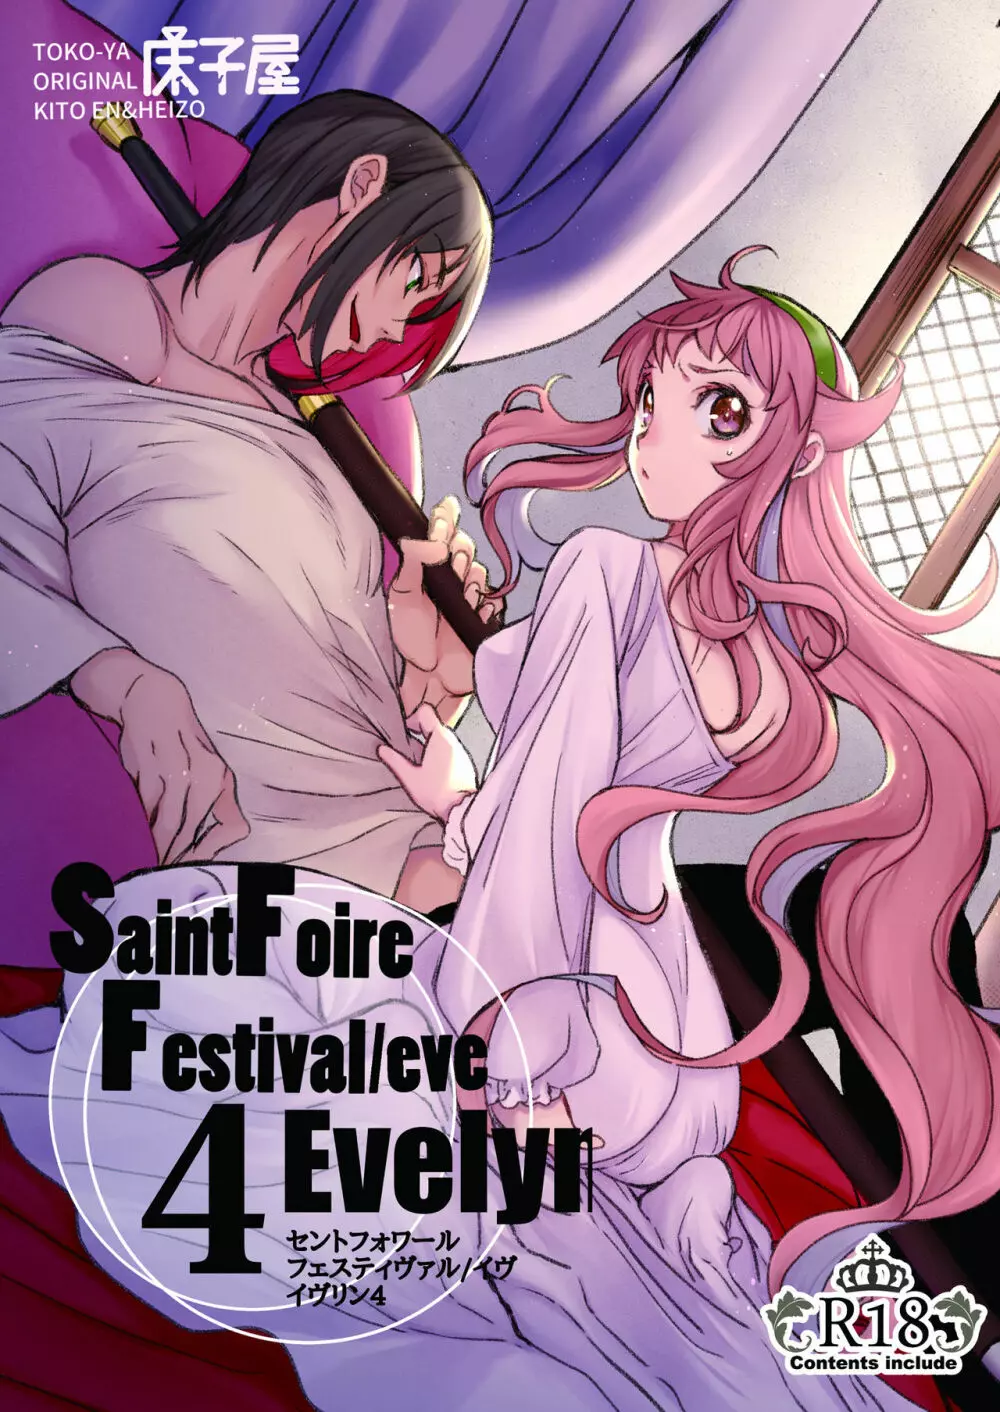 Saint Foire Festival/eve Evelyn:4 - page1